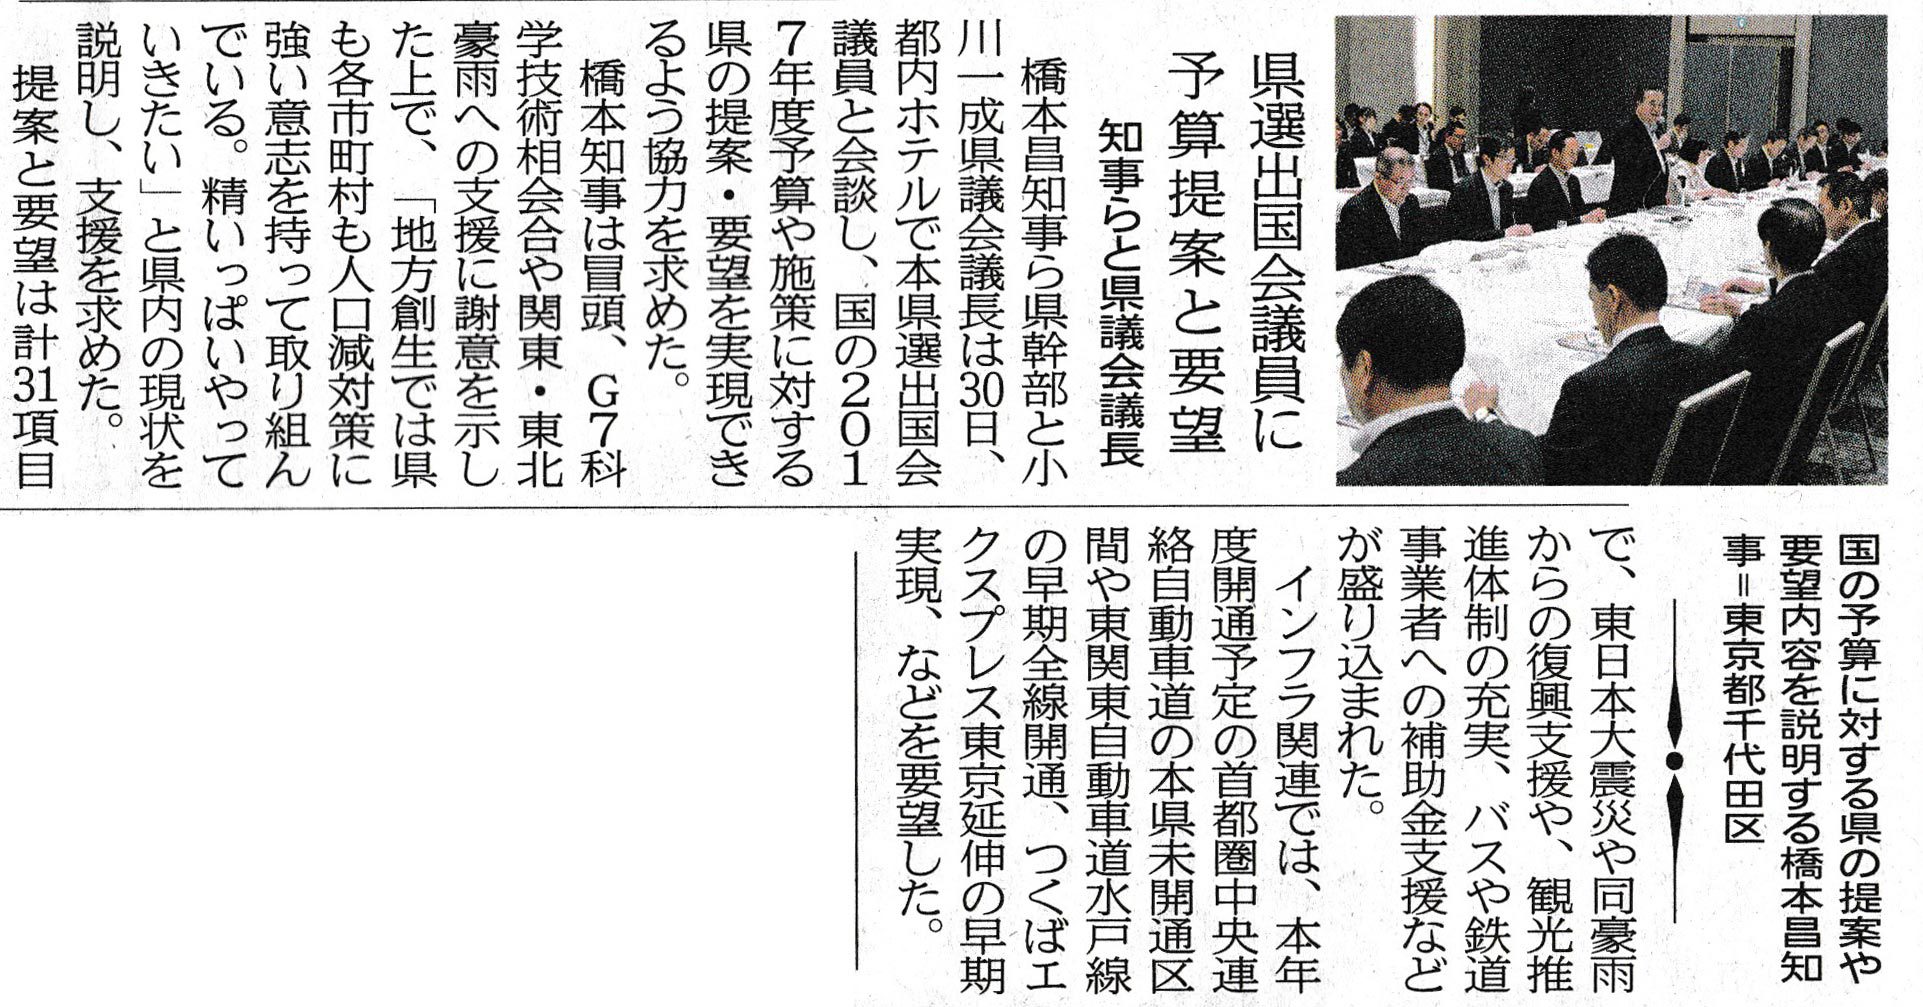 茨城県選出国会議員に予算提案と要望